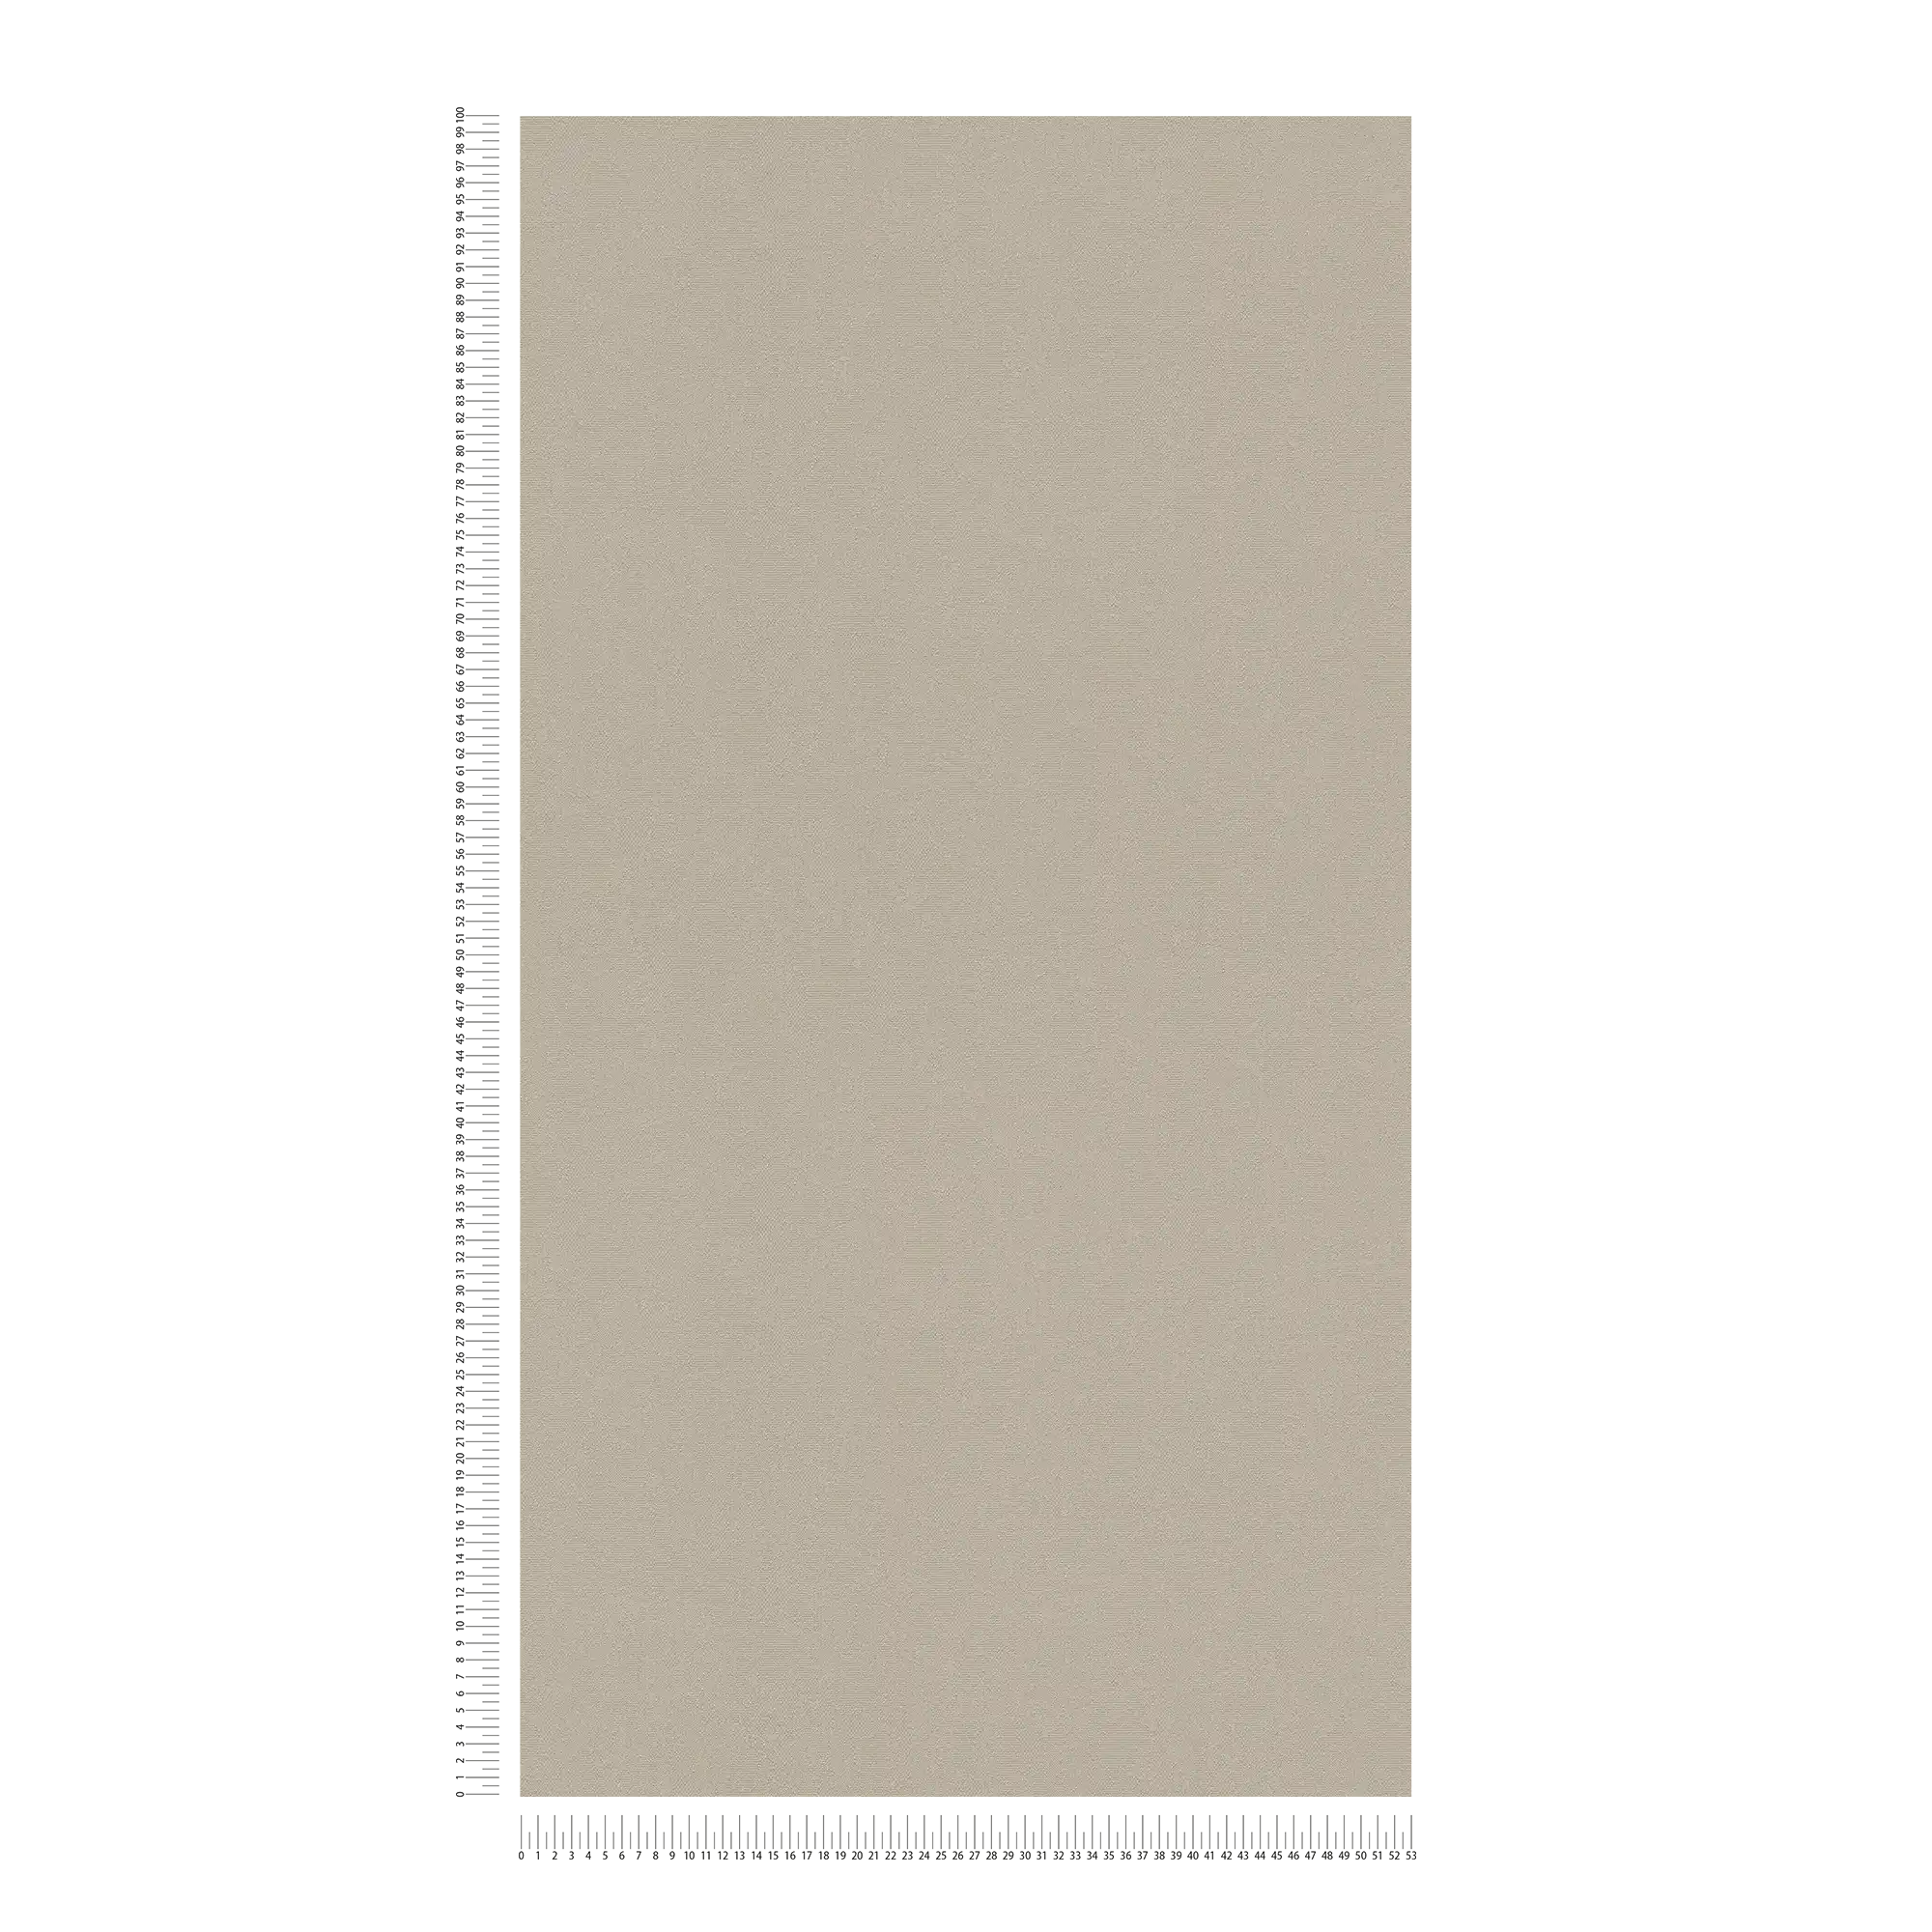             Carta da parati unitaria neutra grigio-beige con superficie strutturata
        